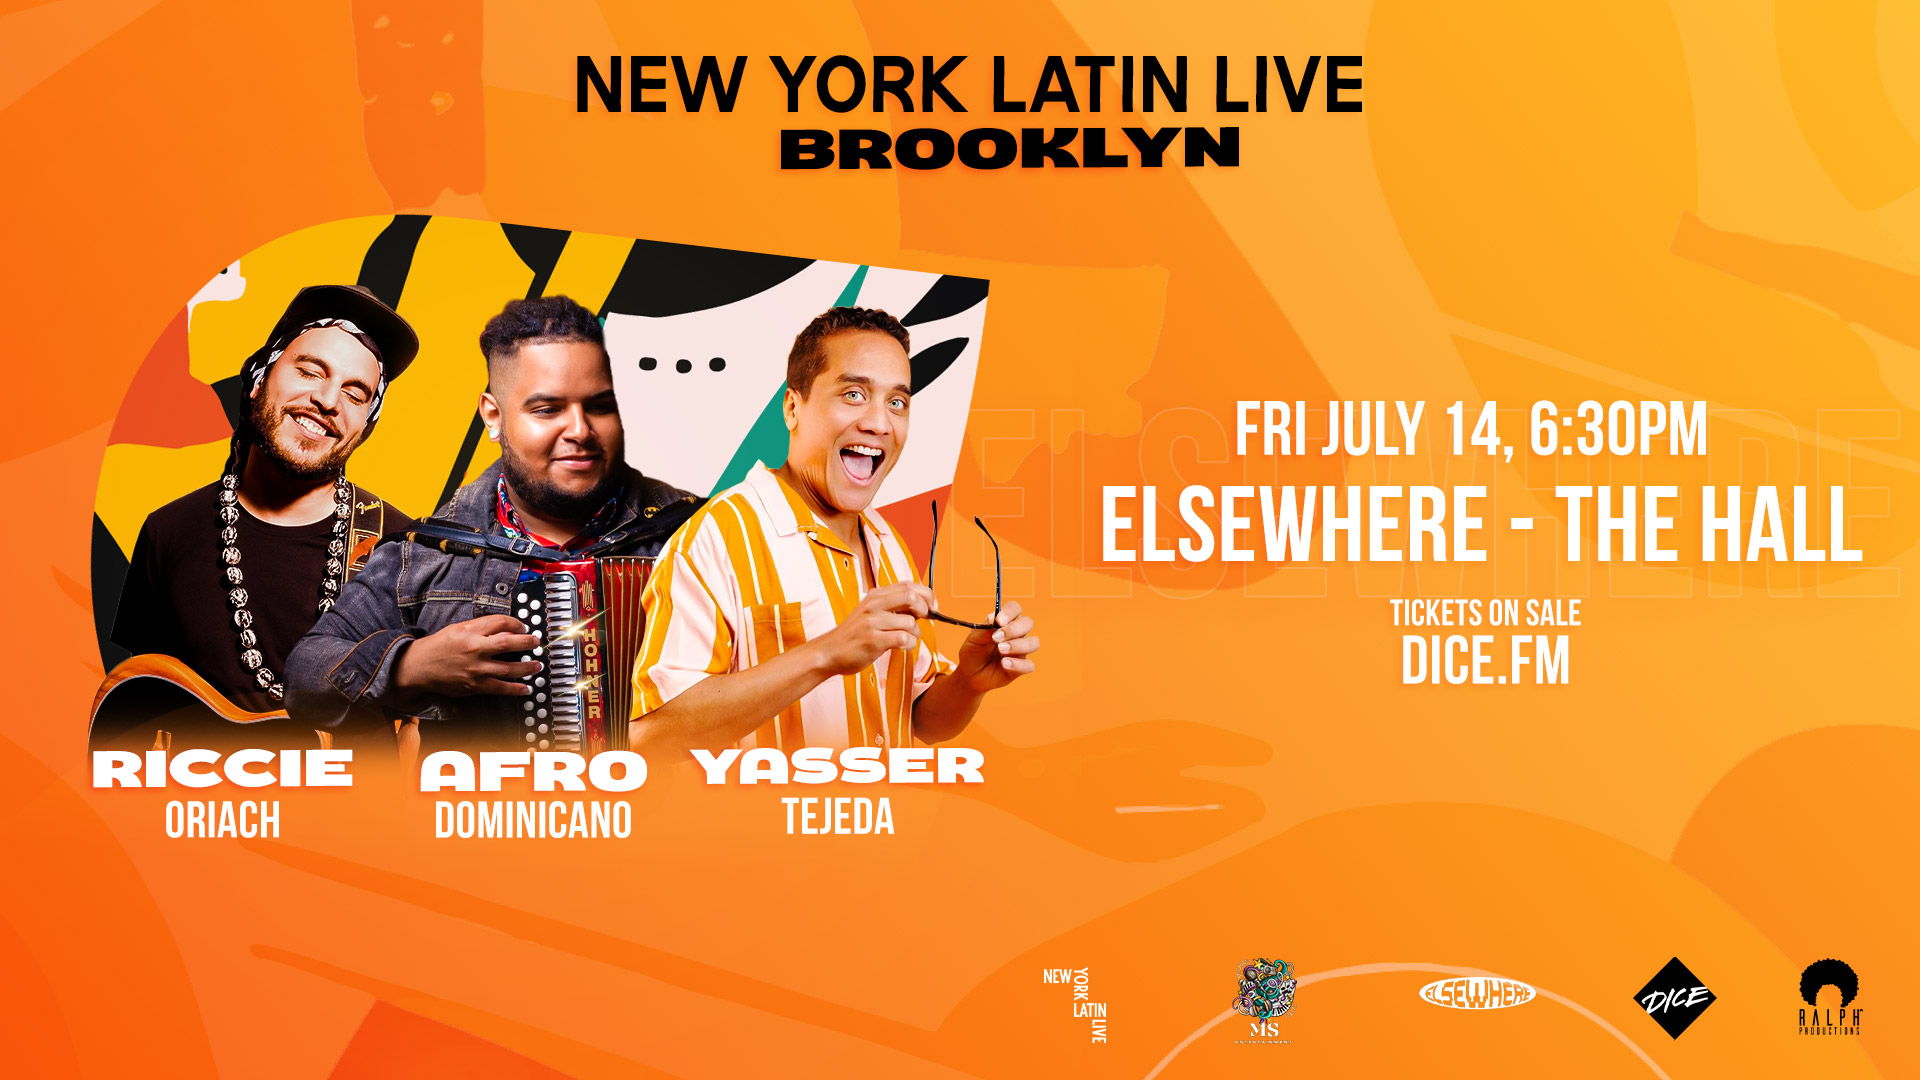 New York Latin Live 2023: Afro Dominicano, Yesser TejAda y Riccie Oriach